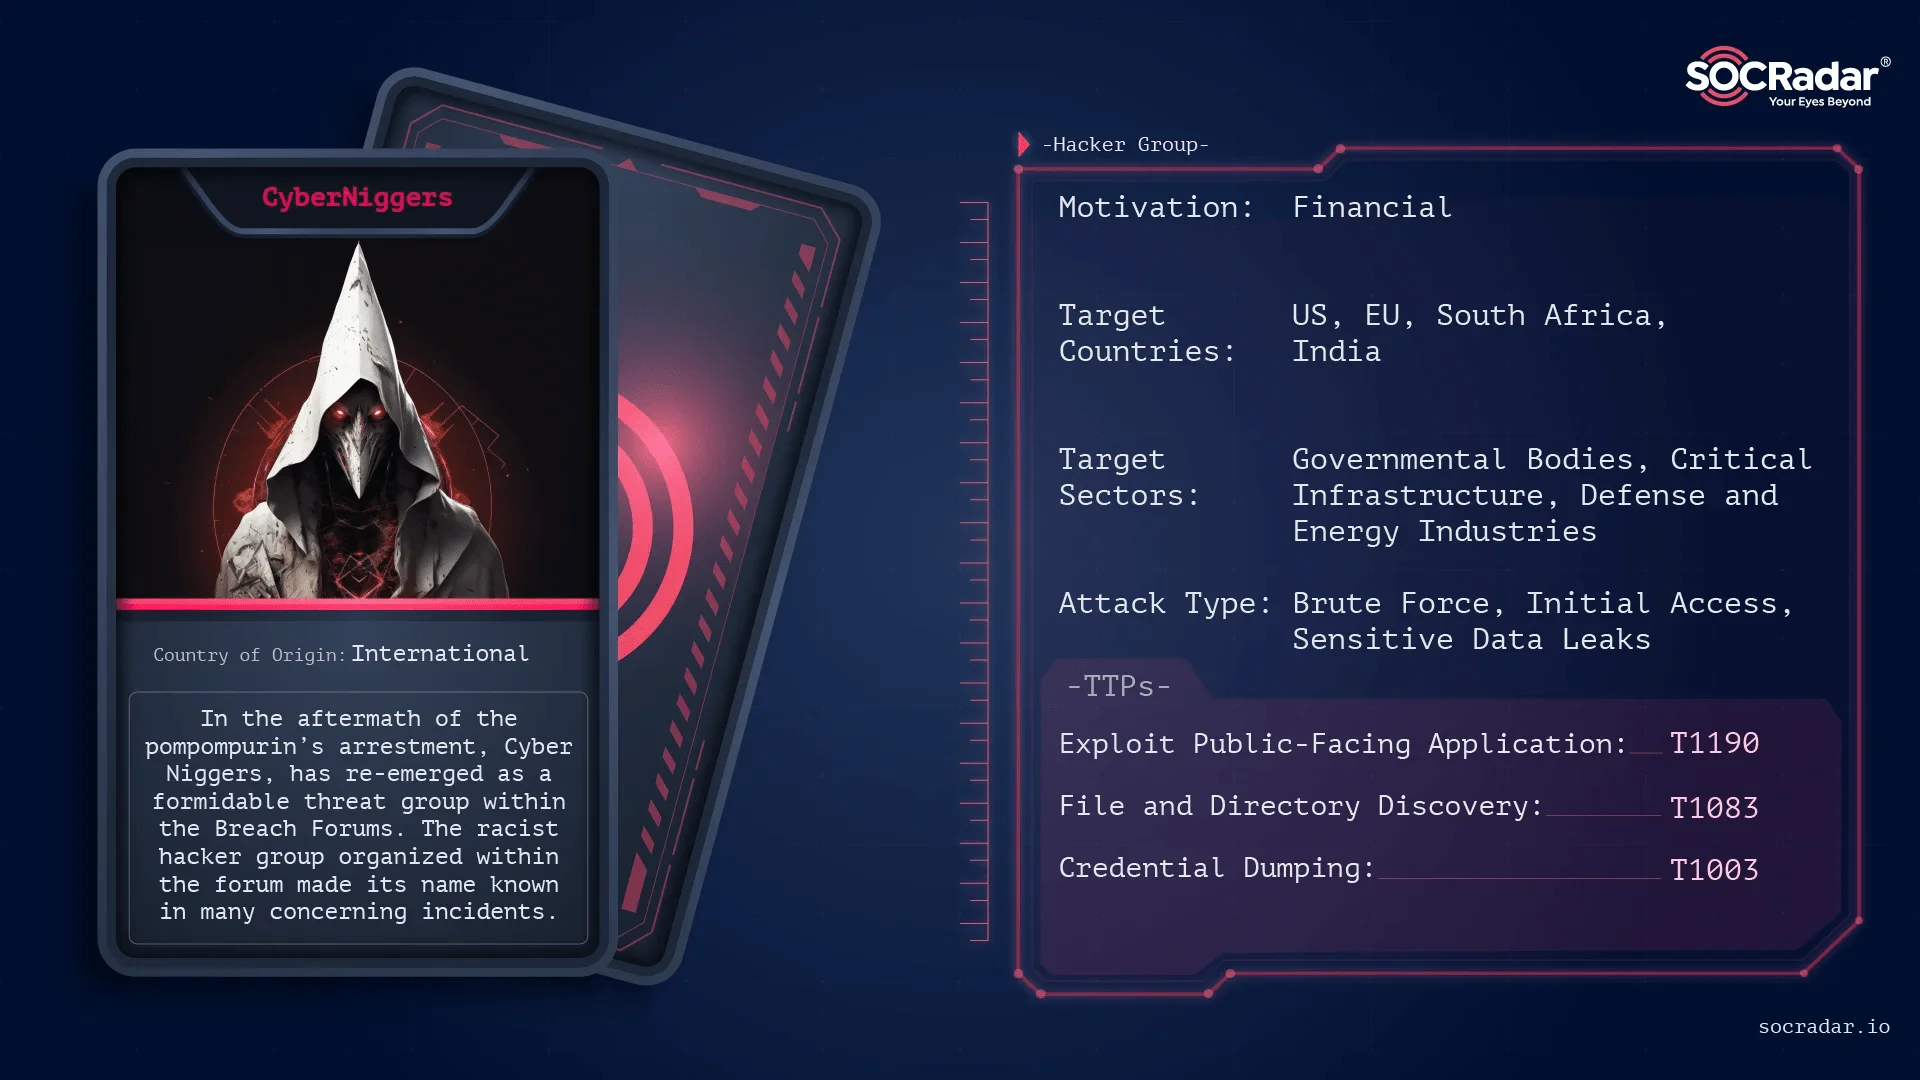 Threat actor card for CyberNiggers, Dark Web Profile: CyberNiggers